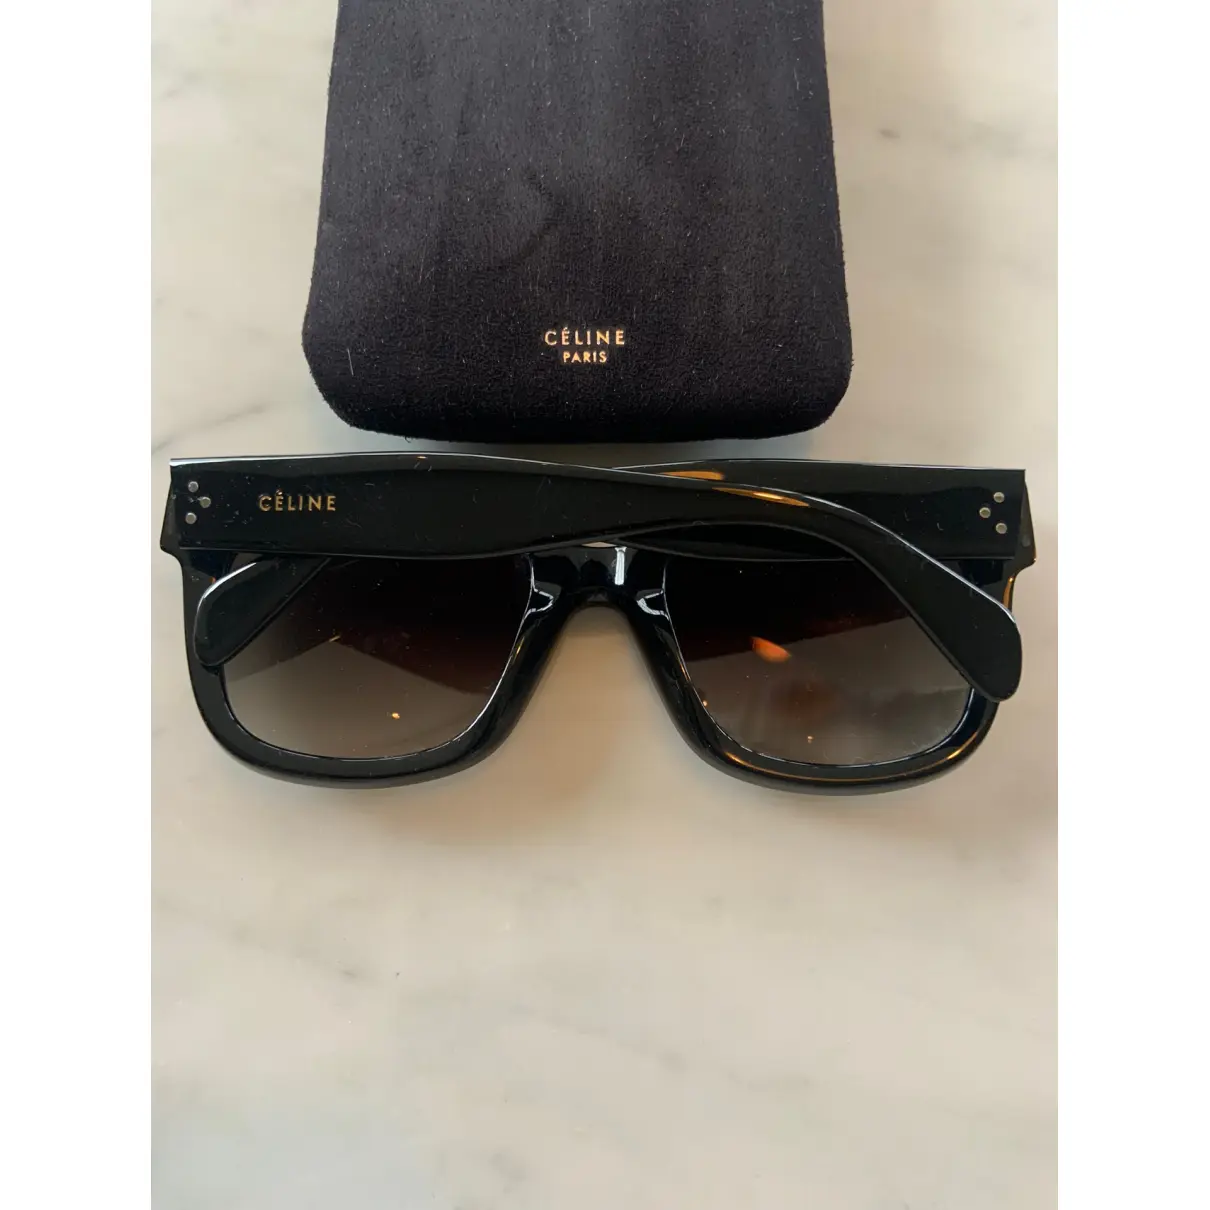 Buy Celine New Audrey sunglasses online